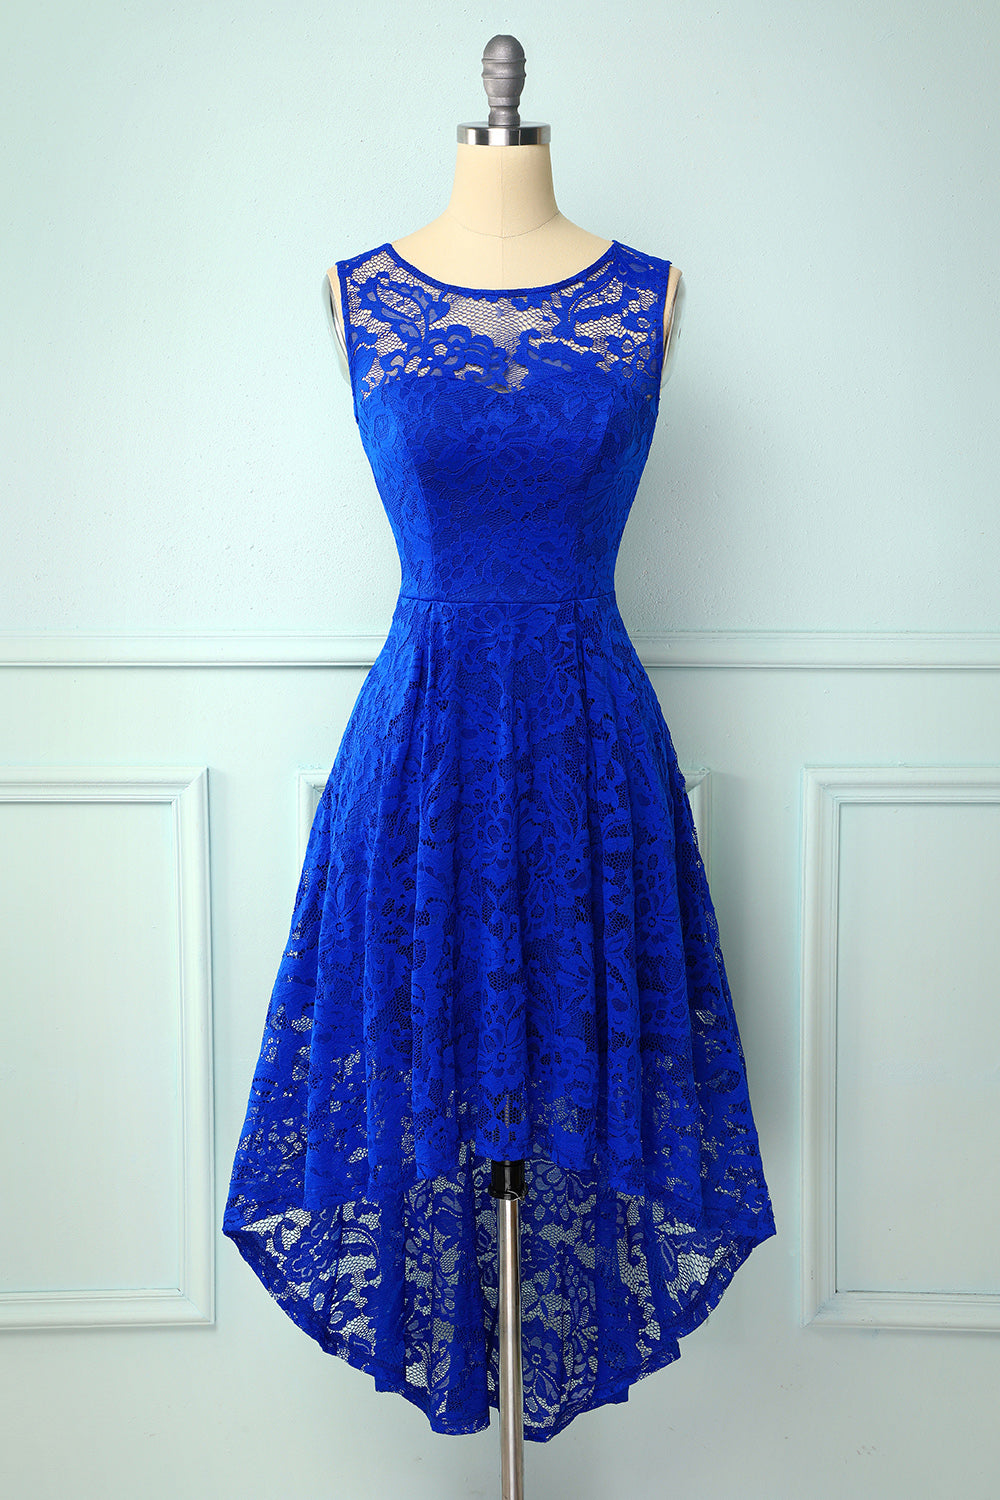 Blue High Low Lace Party Dress